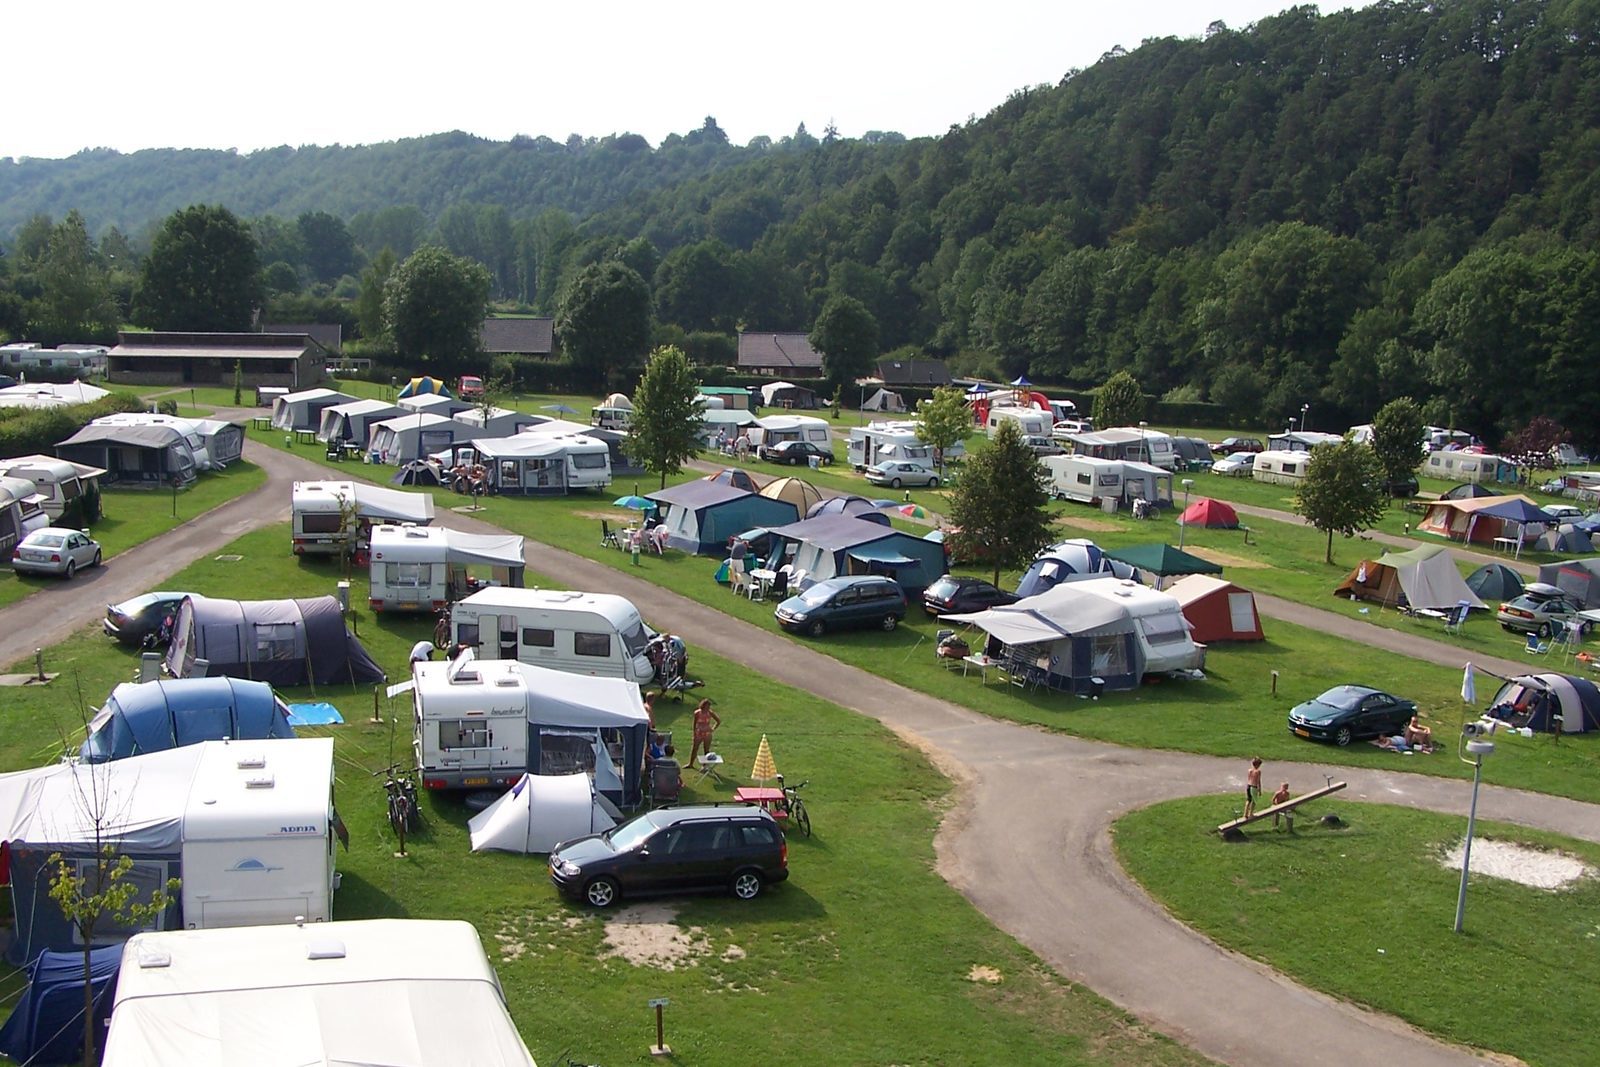 Camping in Belgium